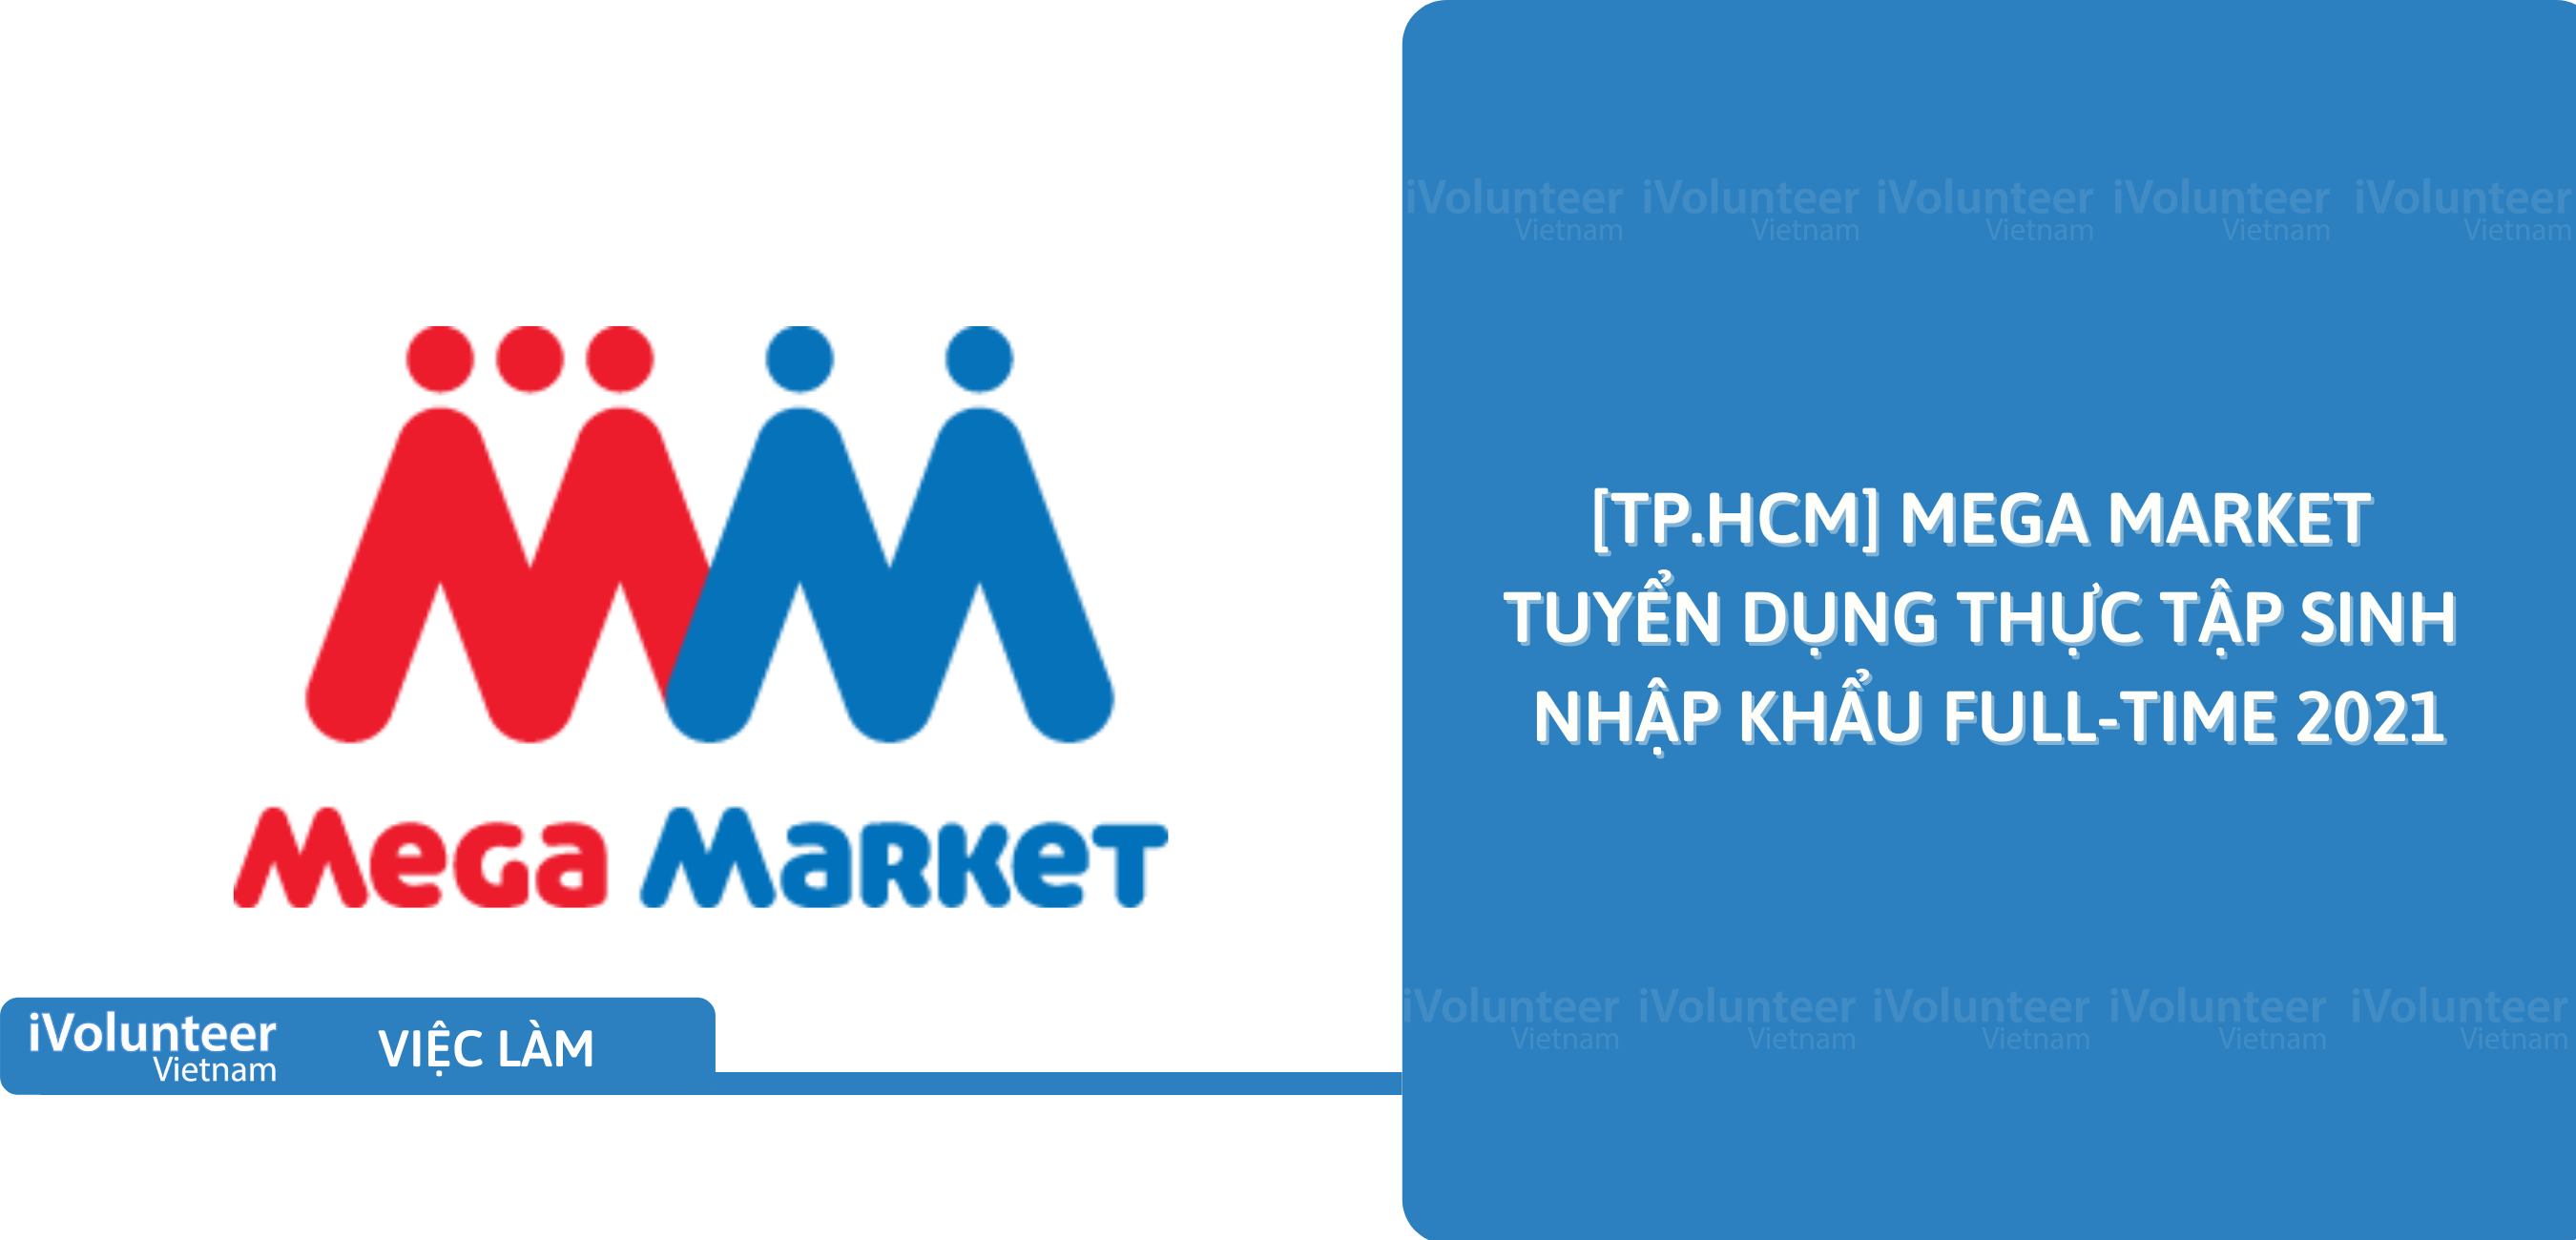 [TP.HCM] Mega Market Tuyển Dụng Thực Tập Sinh Nhập Khẩu Full-time 2021